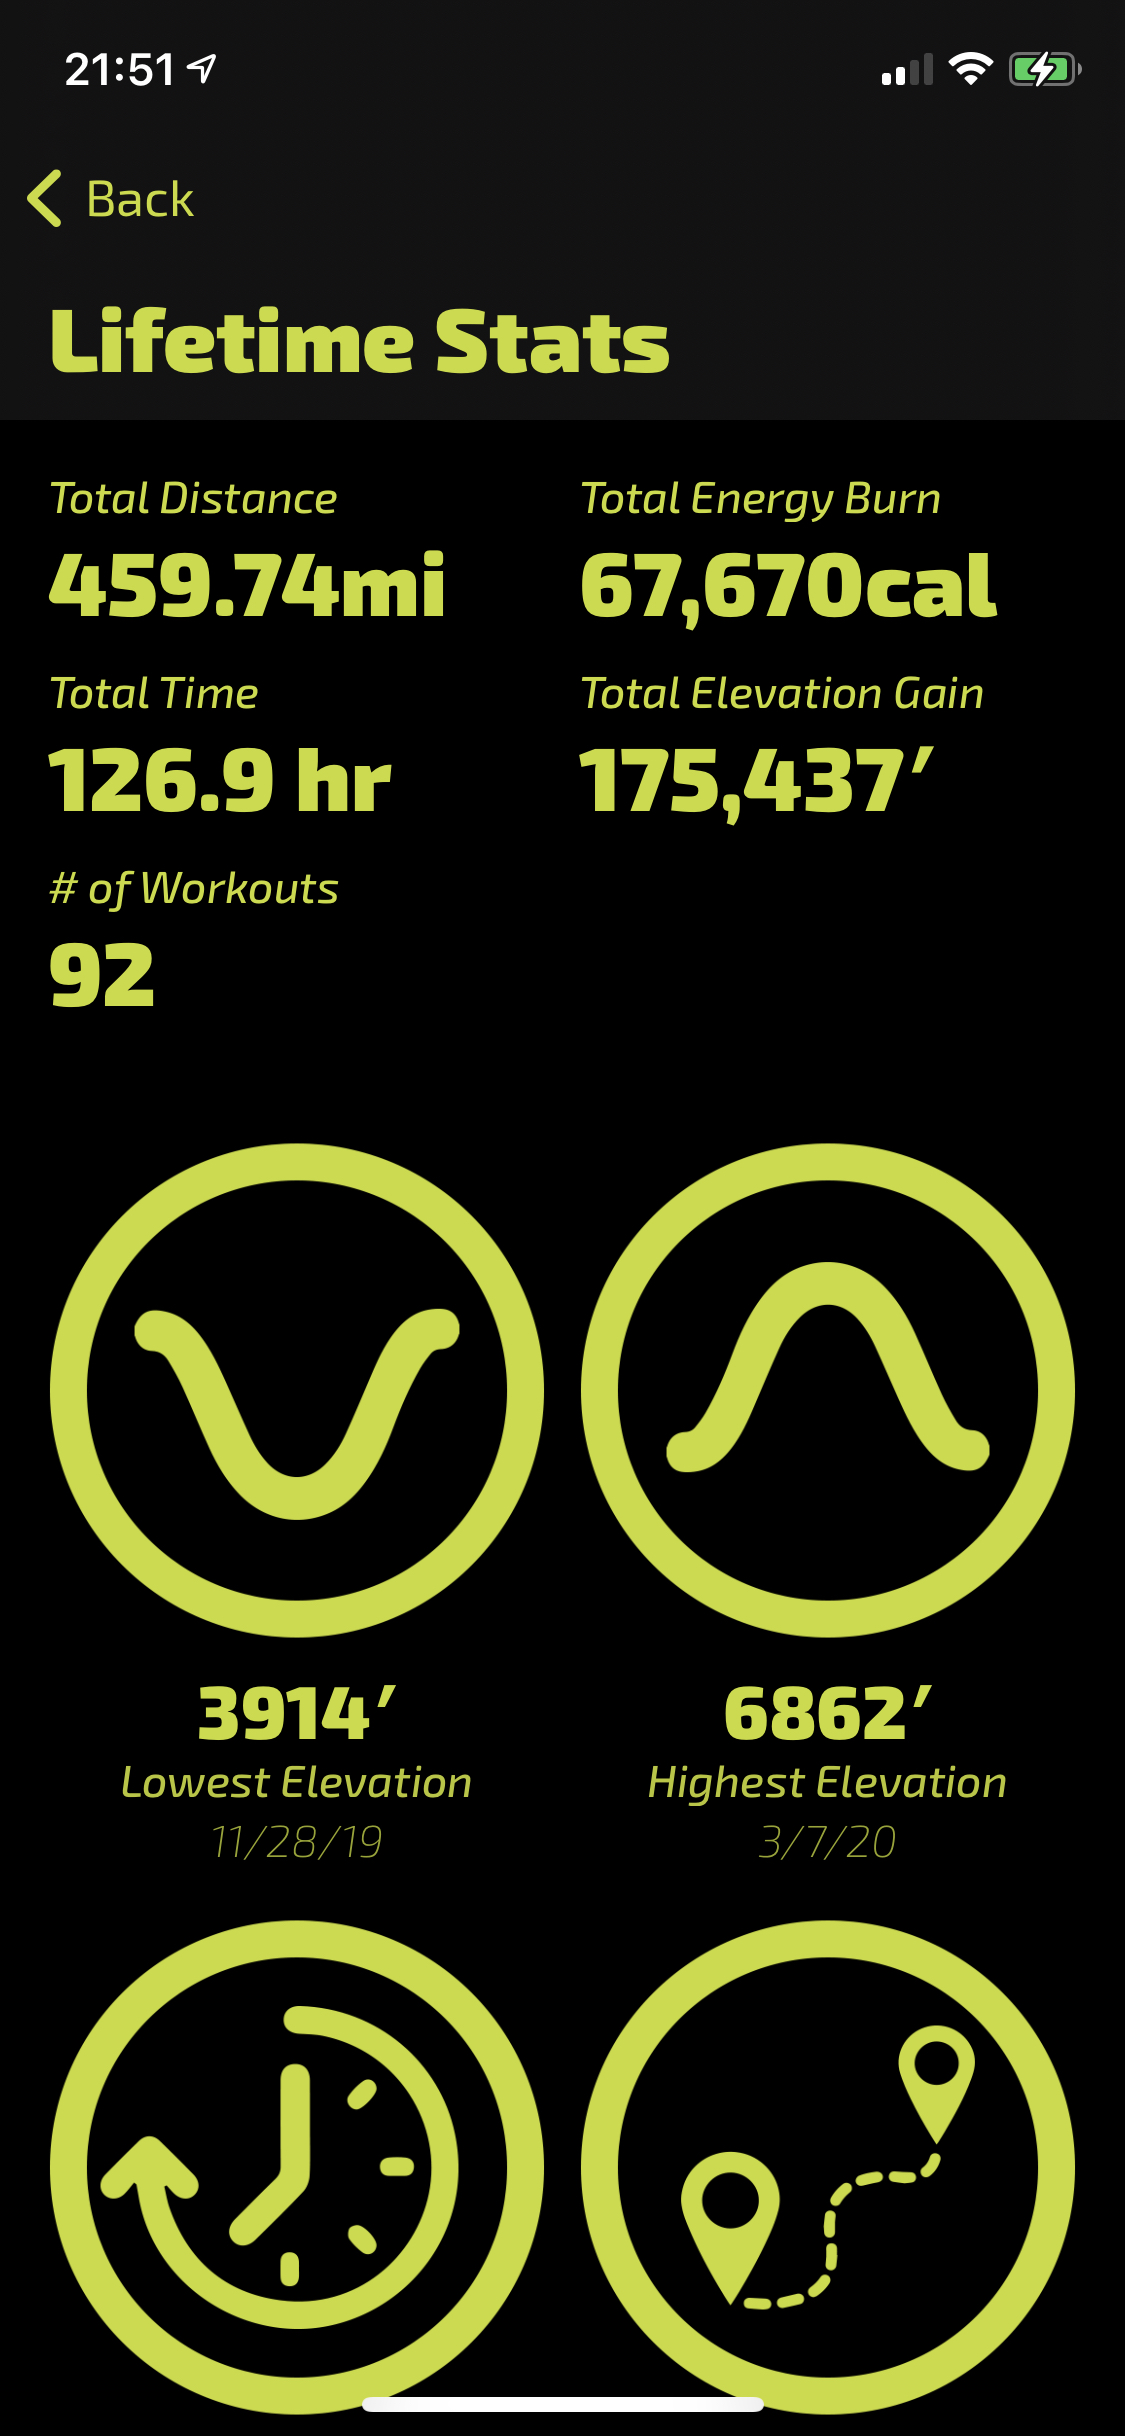 Lifetime workout stats.